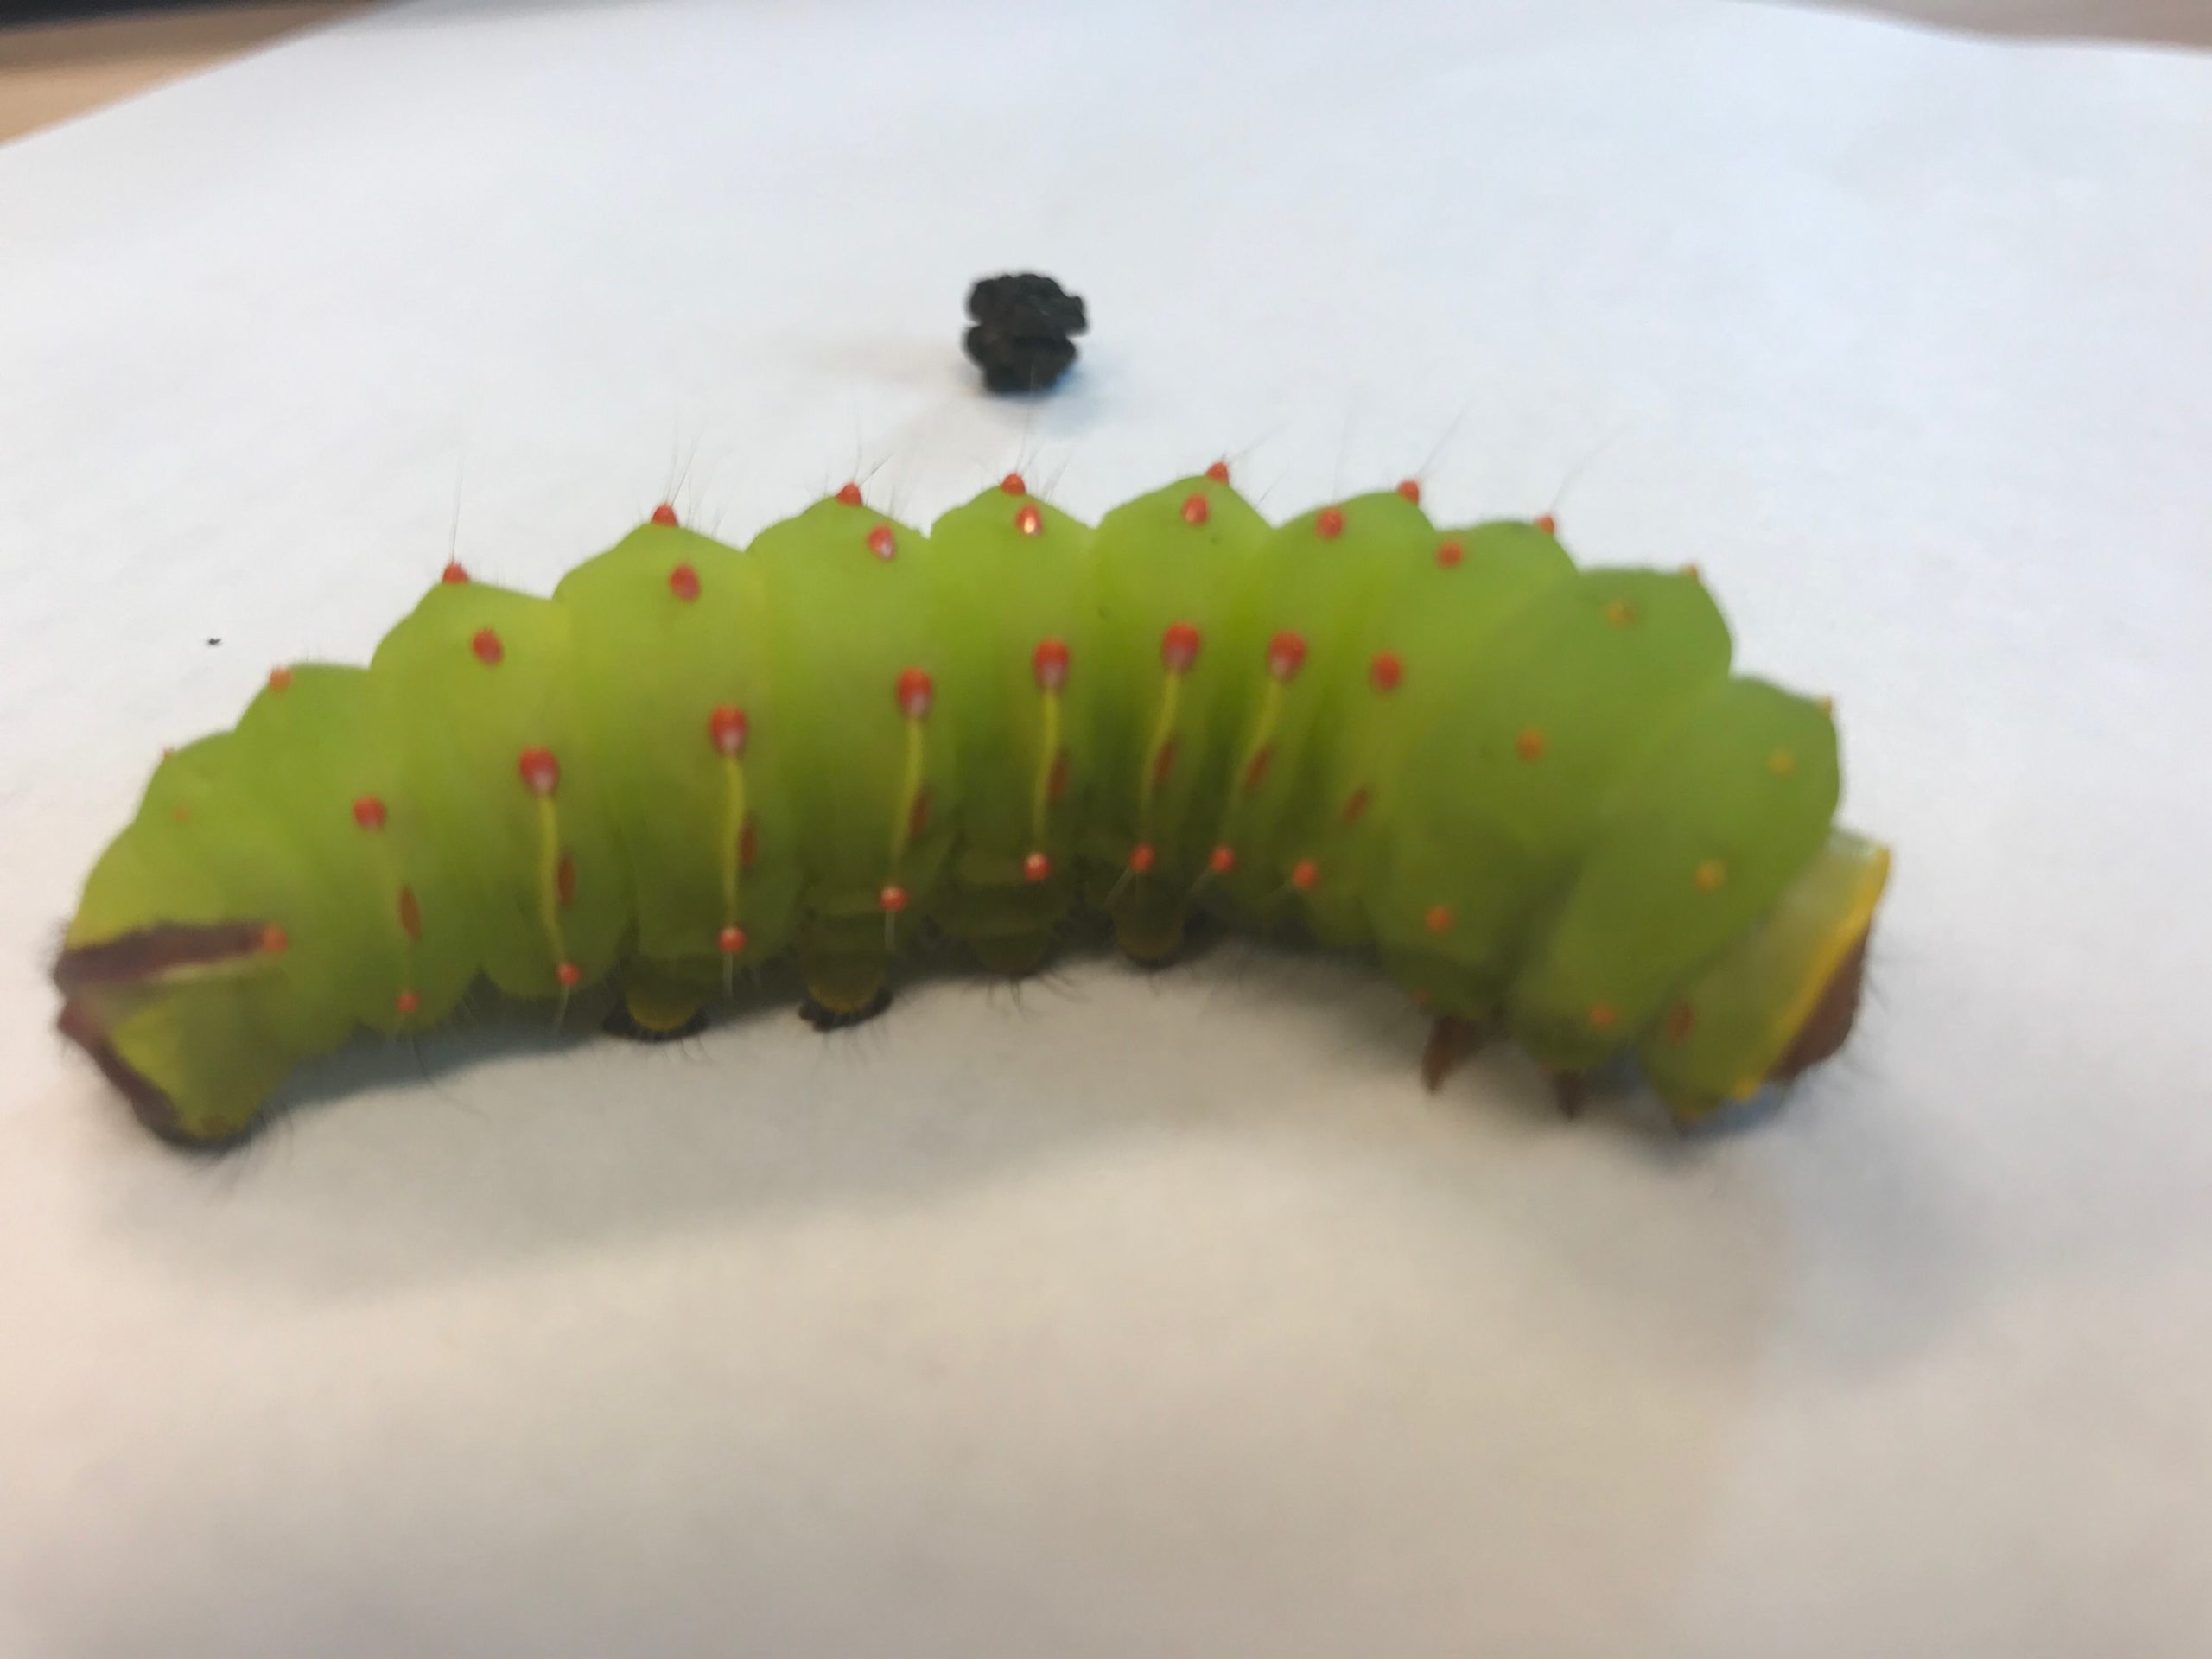 Polyphemus Moth Cocoon